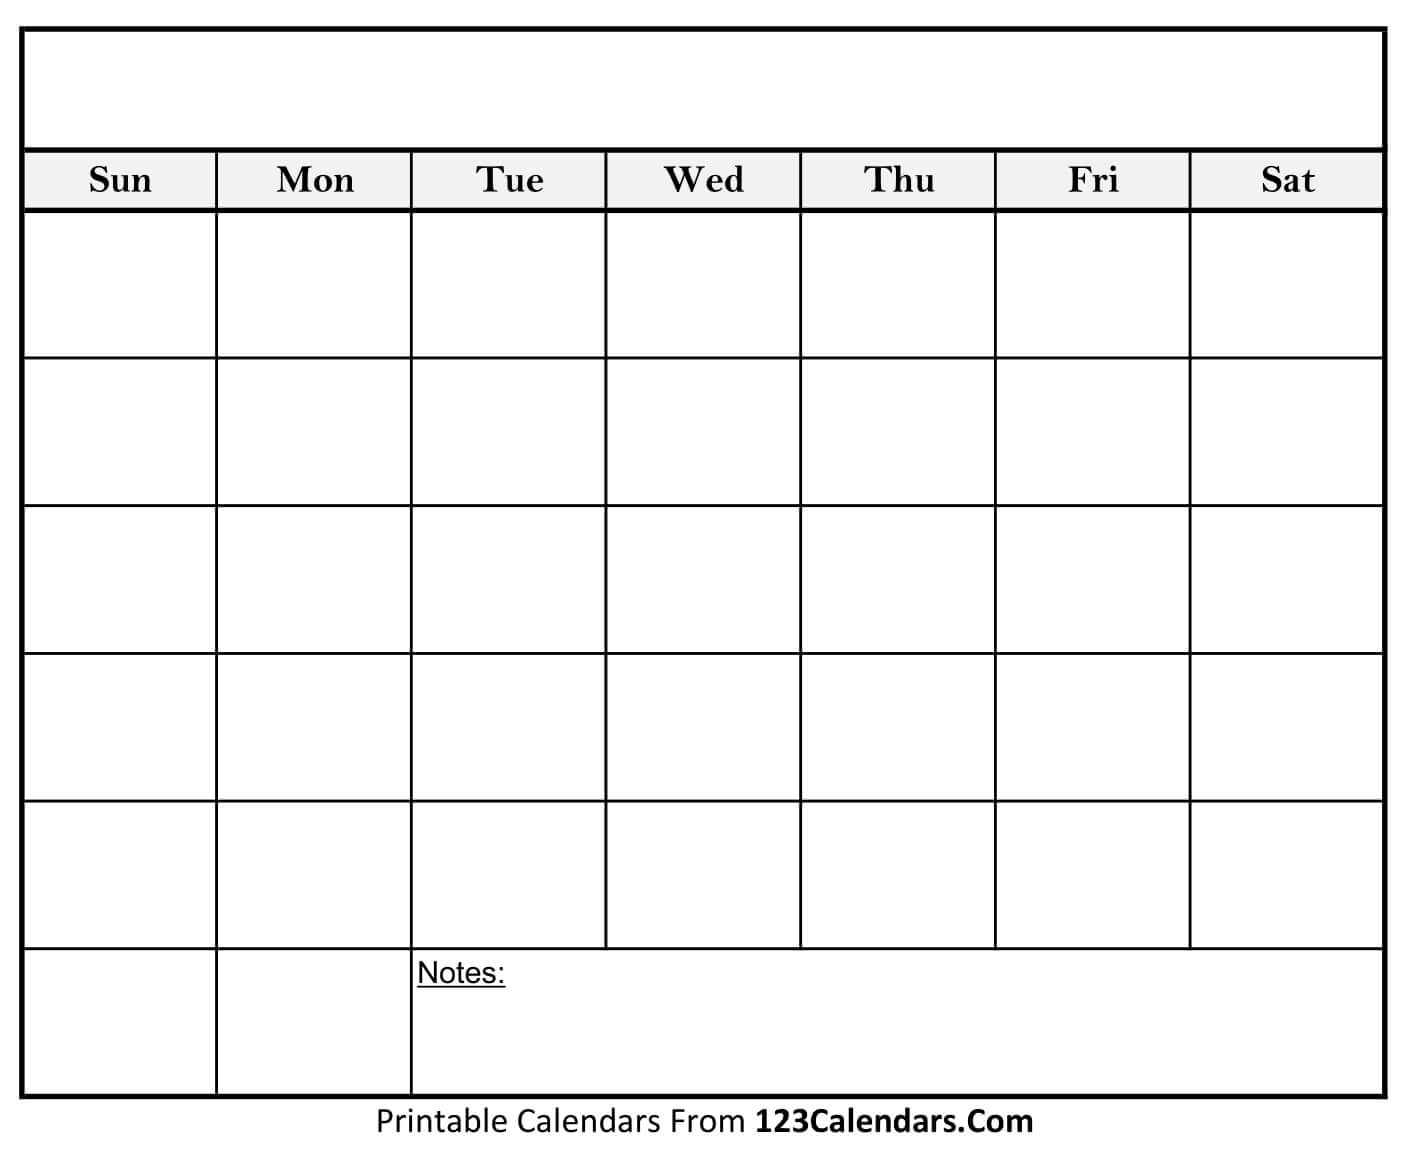 Free Printable Blank Calendar | 123Calendars With Blank Calander Template